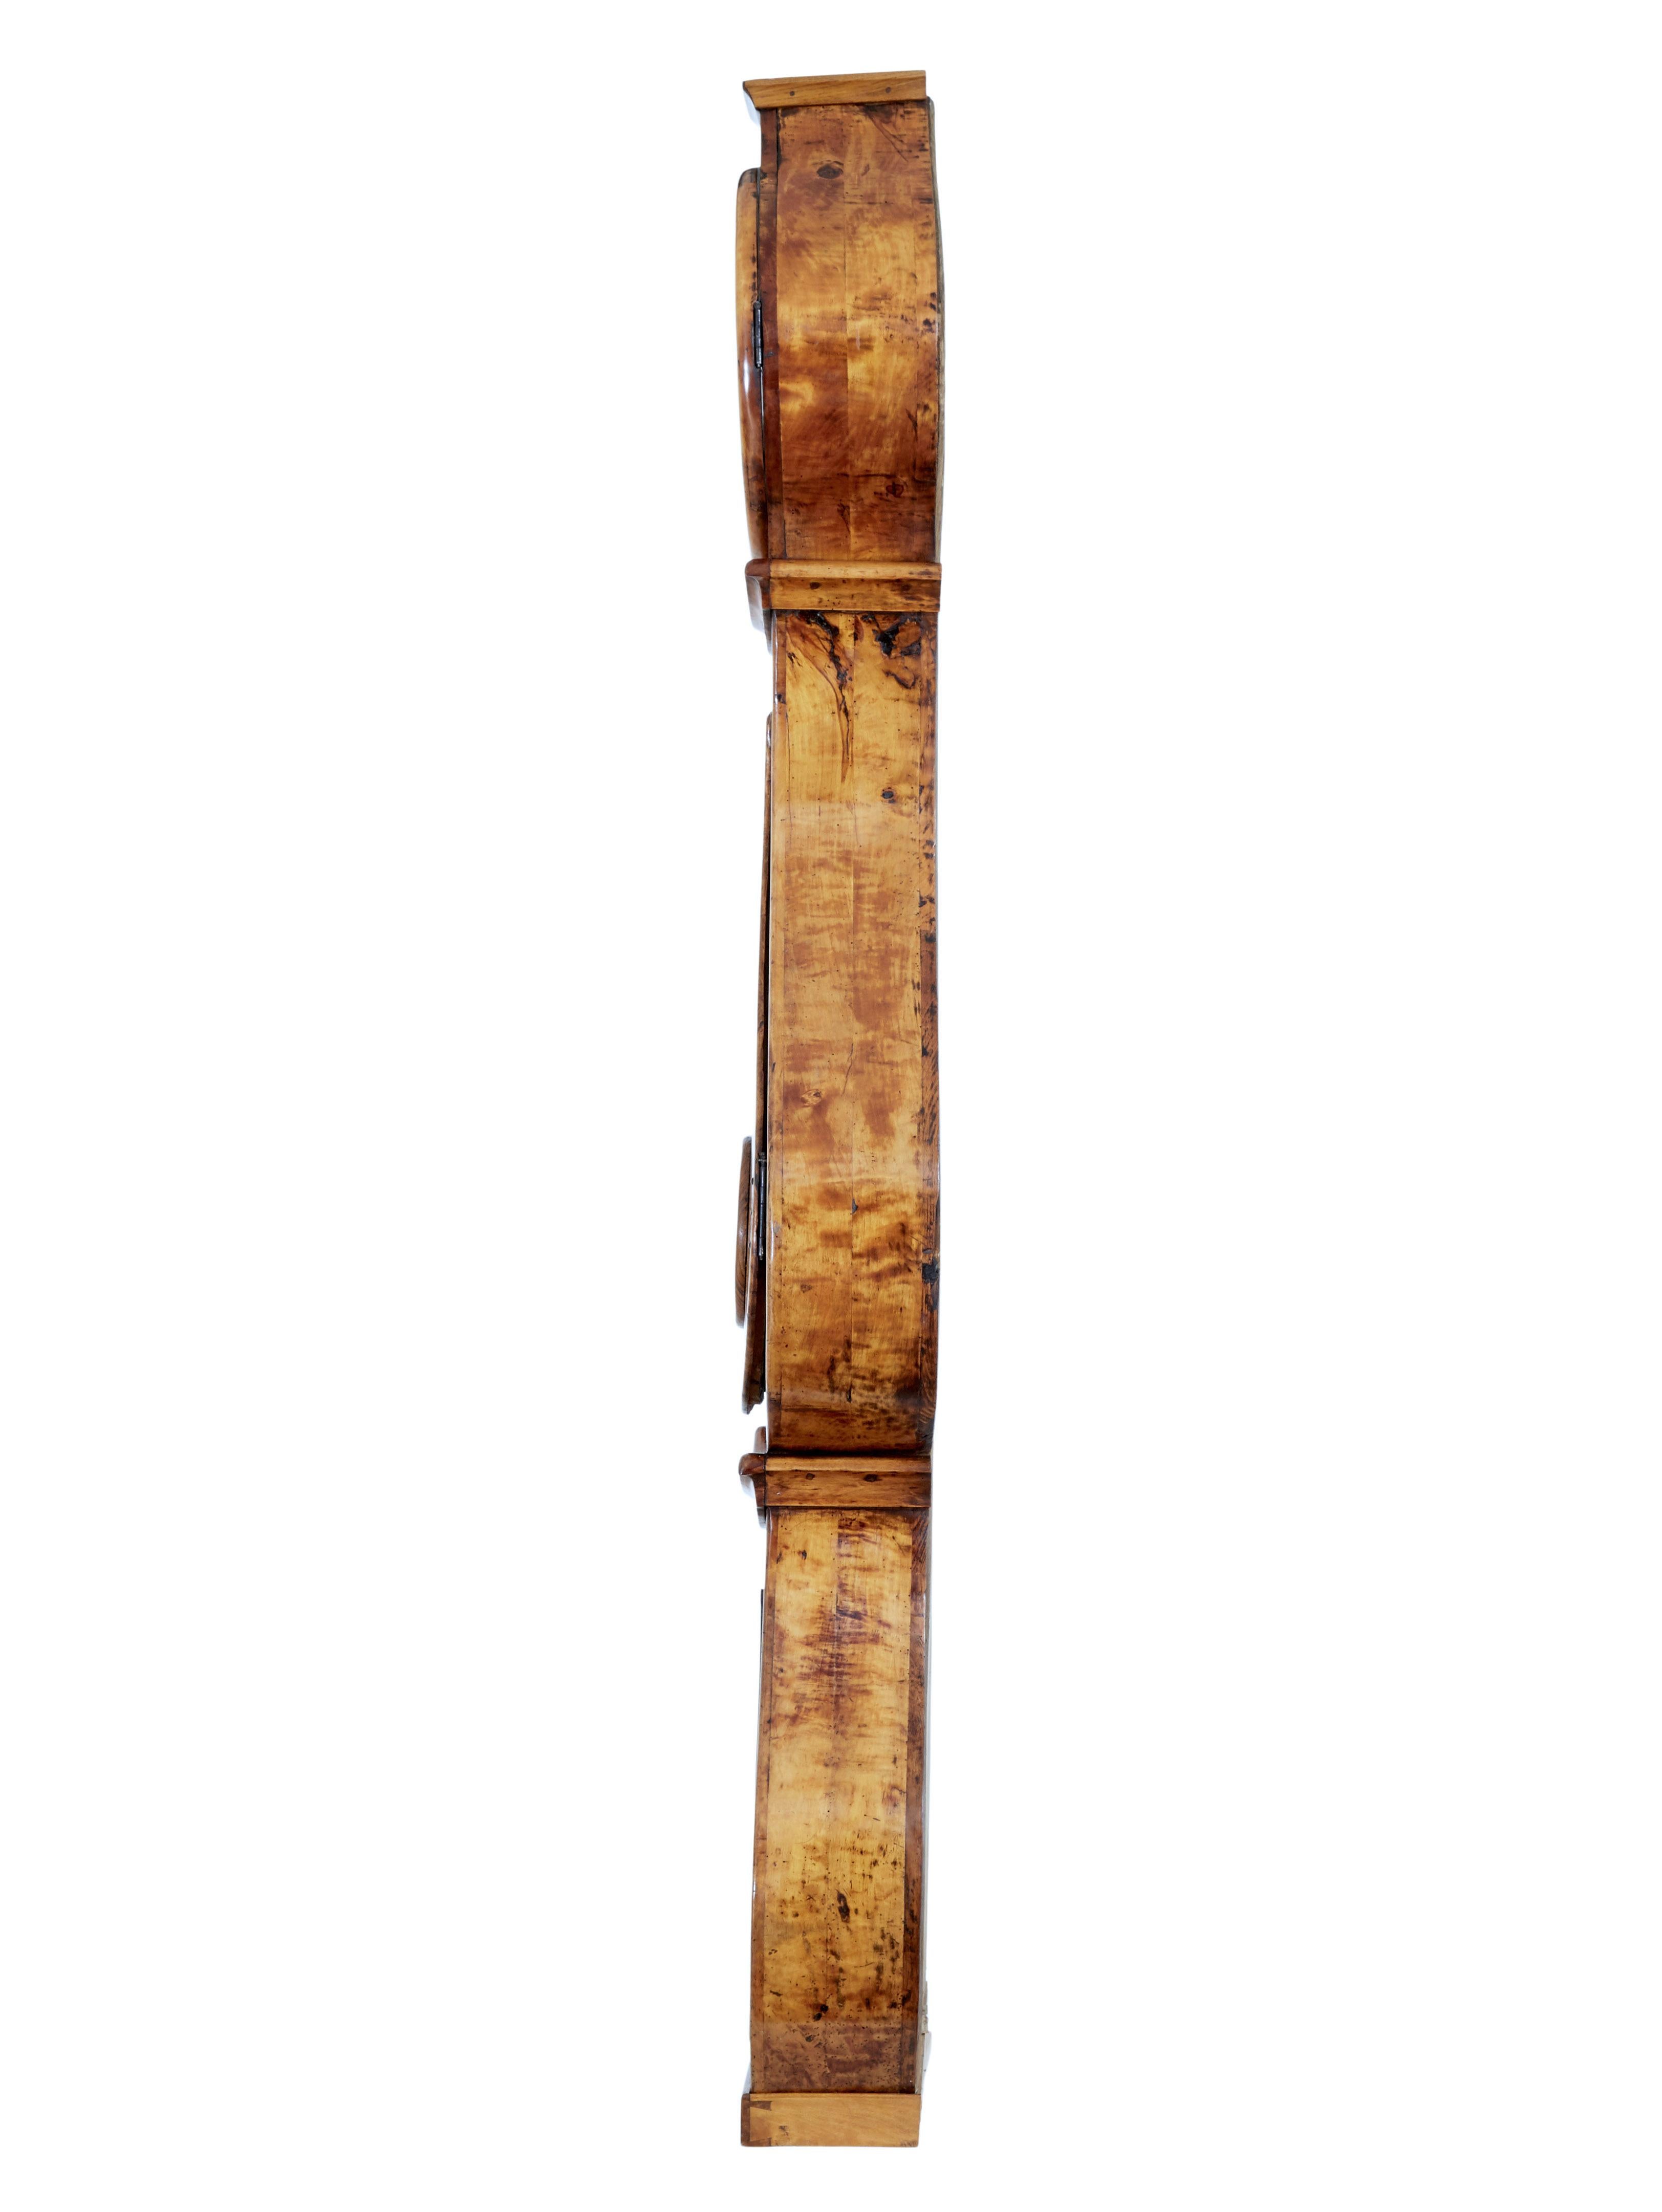 Gustavian 19th Century Inlaid Birch Mora Long Case Clock